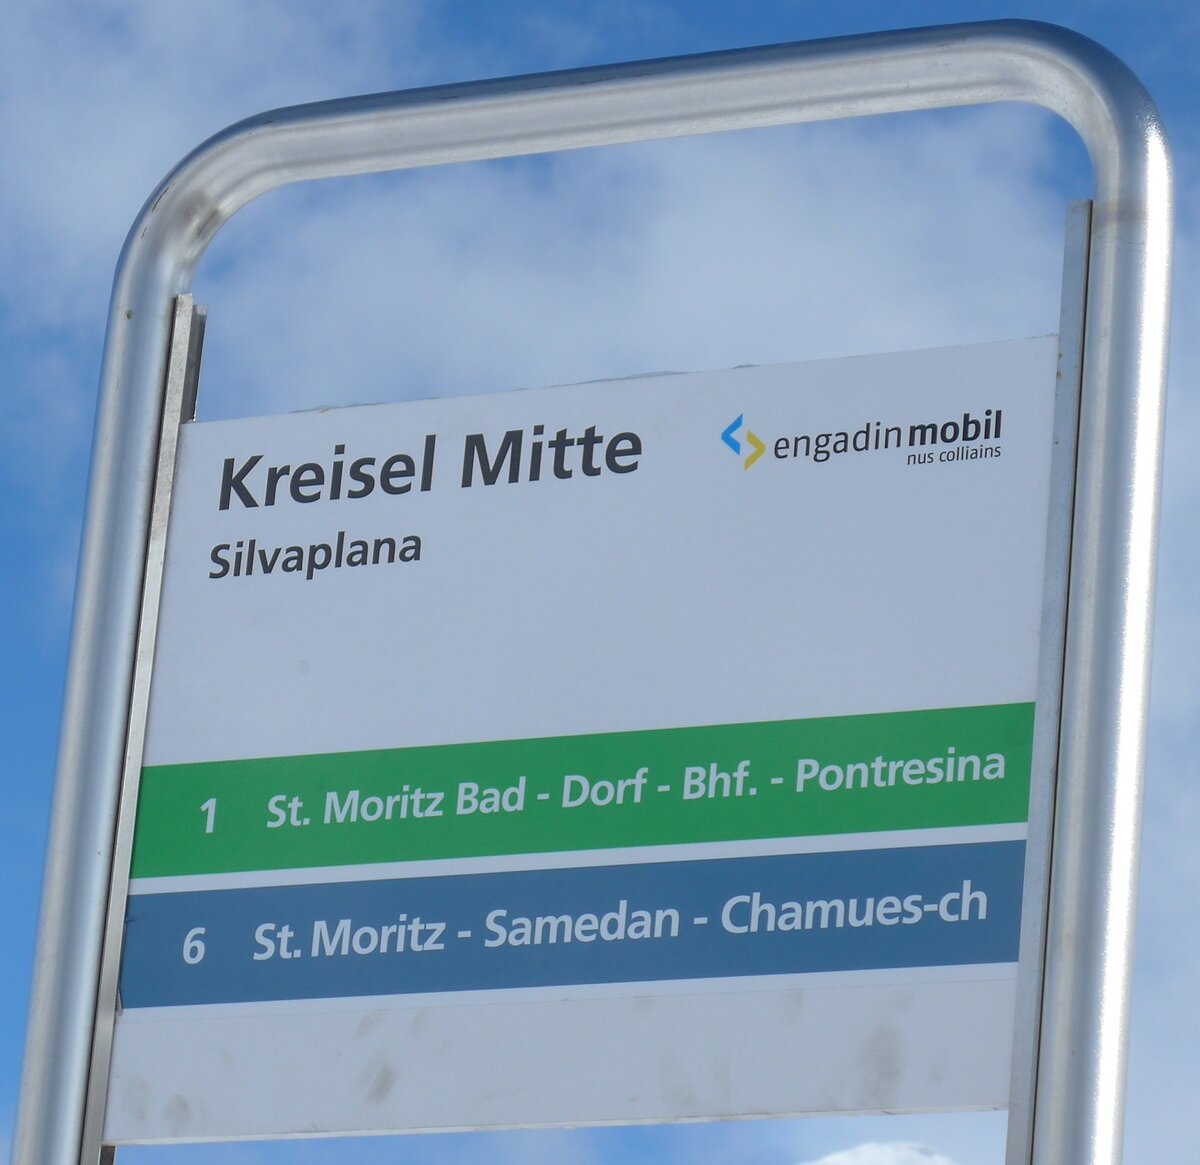 (201'416) - engadin mobil-Haltestellenschild - Silvaplana, Kreisel Mitte - am 2. Februar 2019